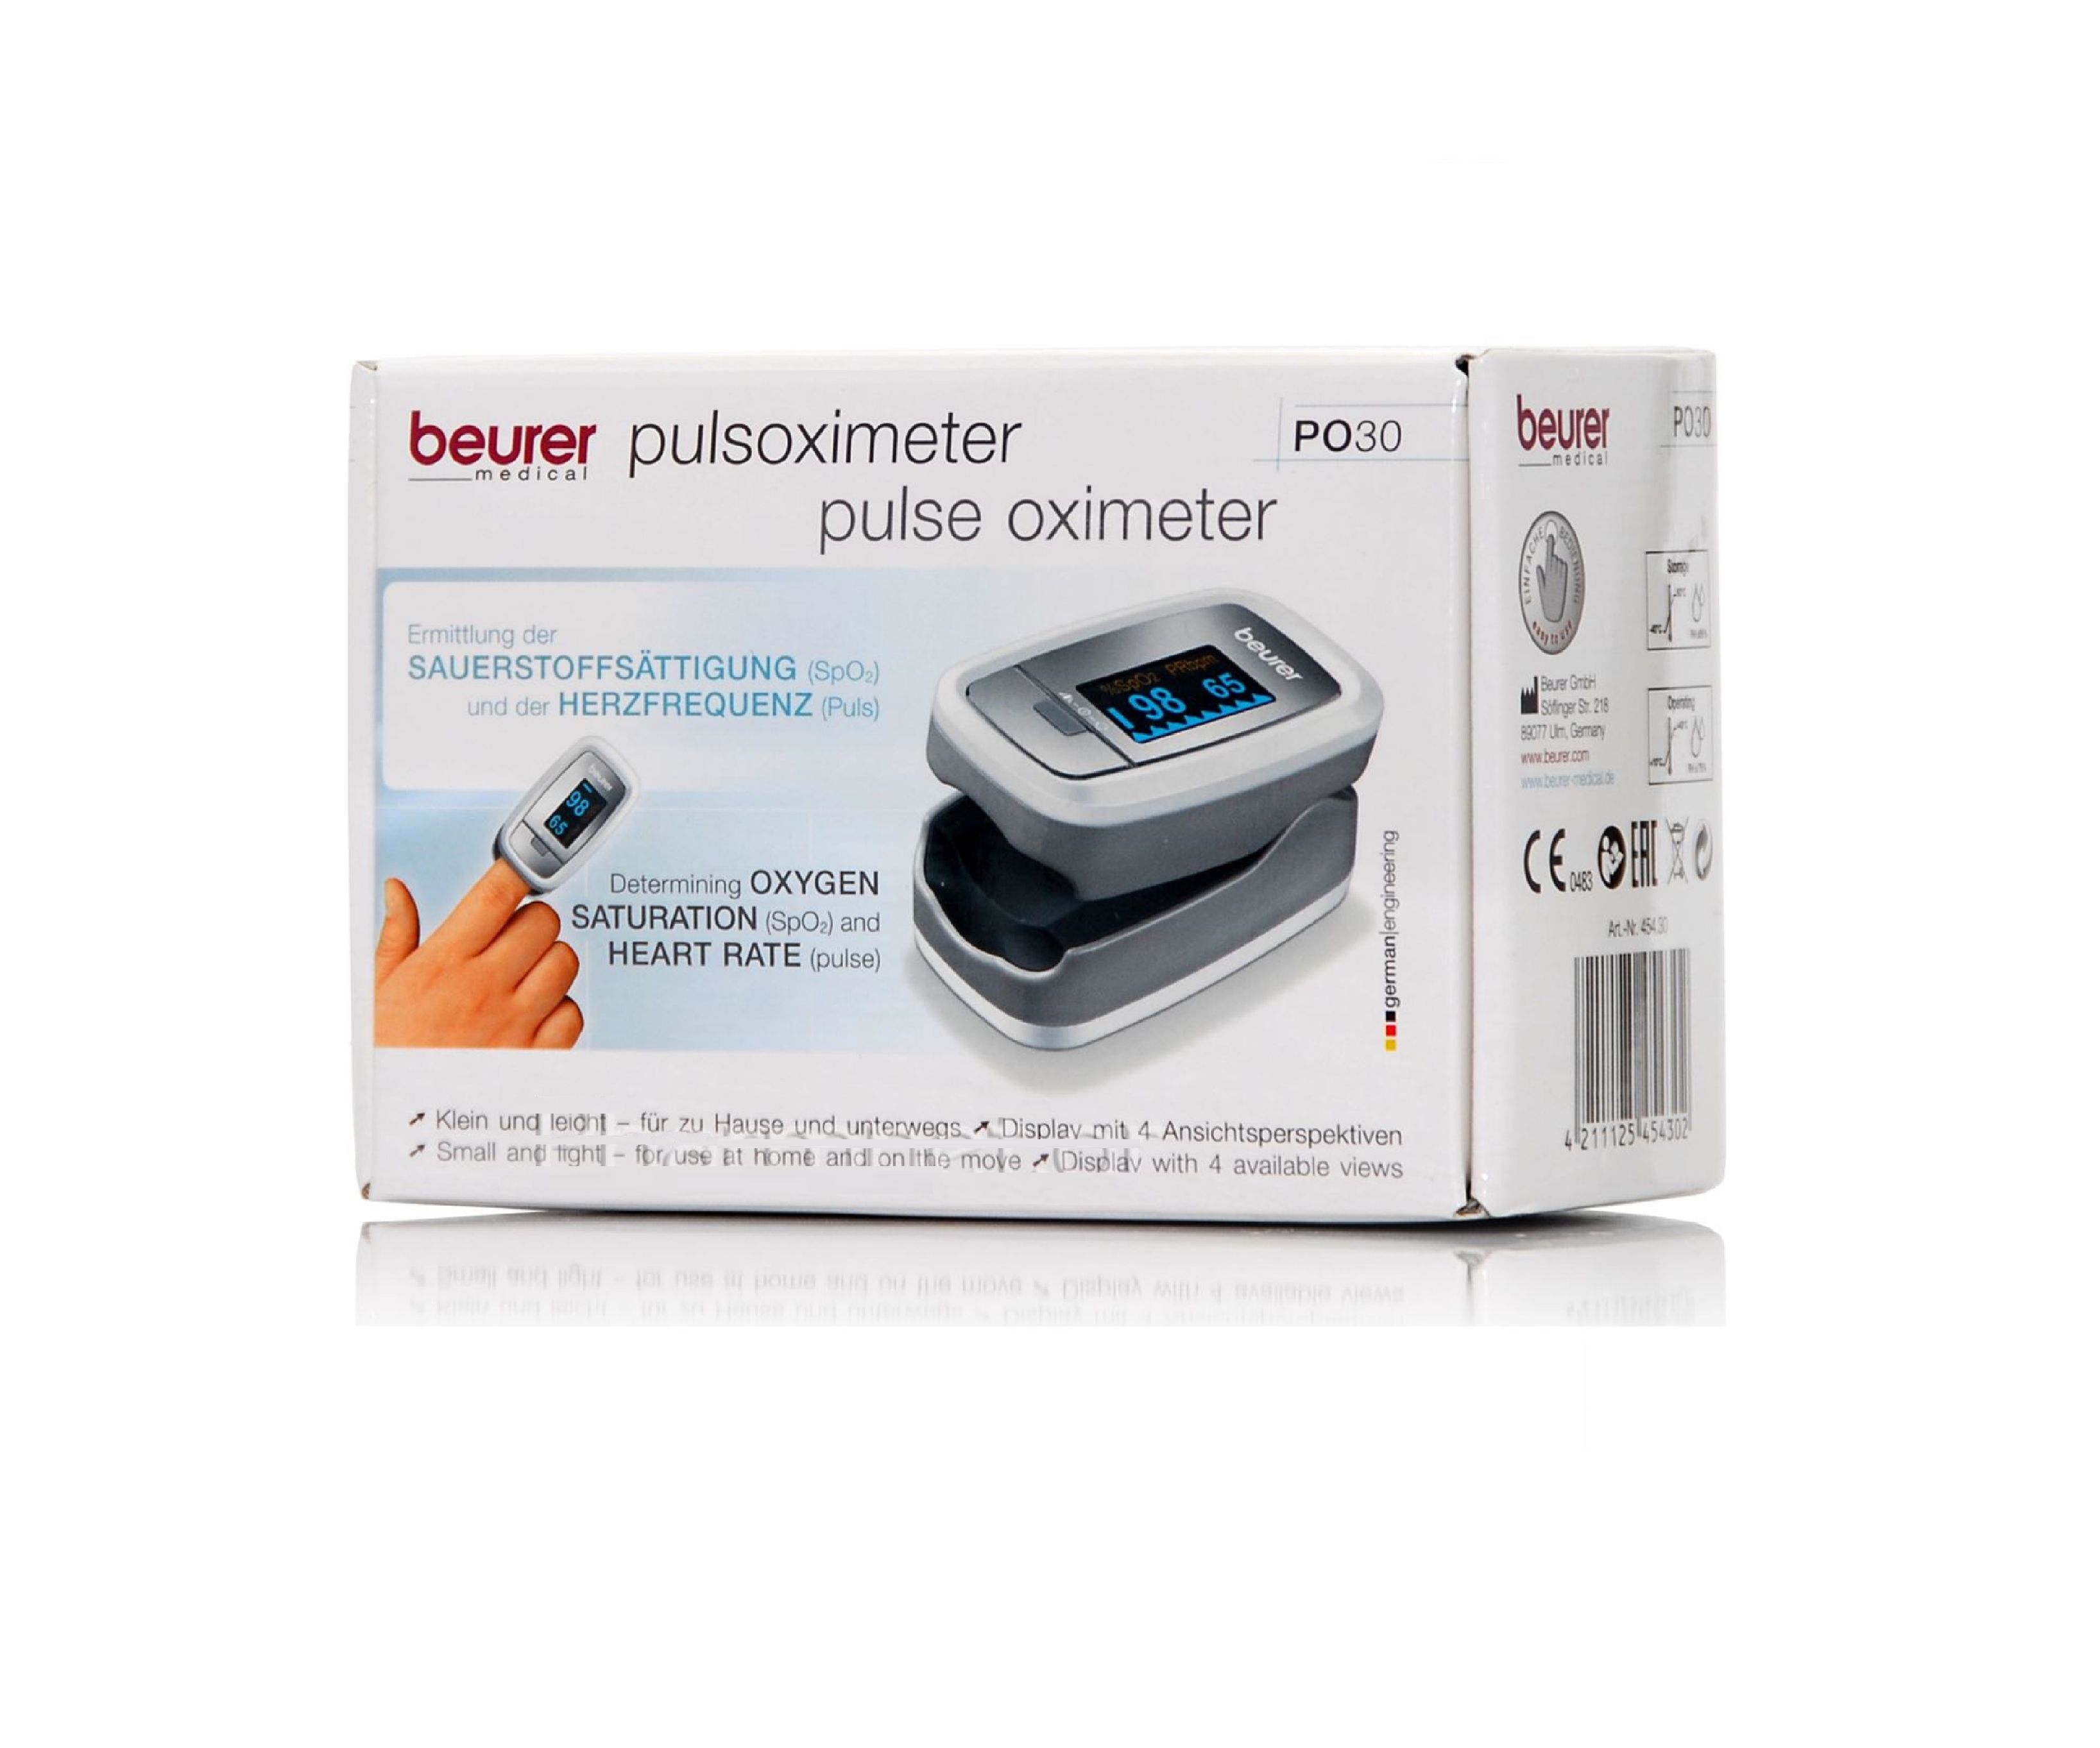 Beurer pulse oximeter review